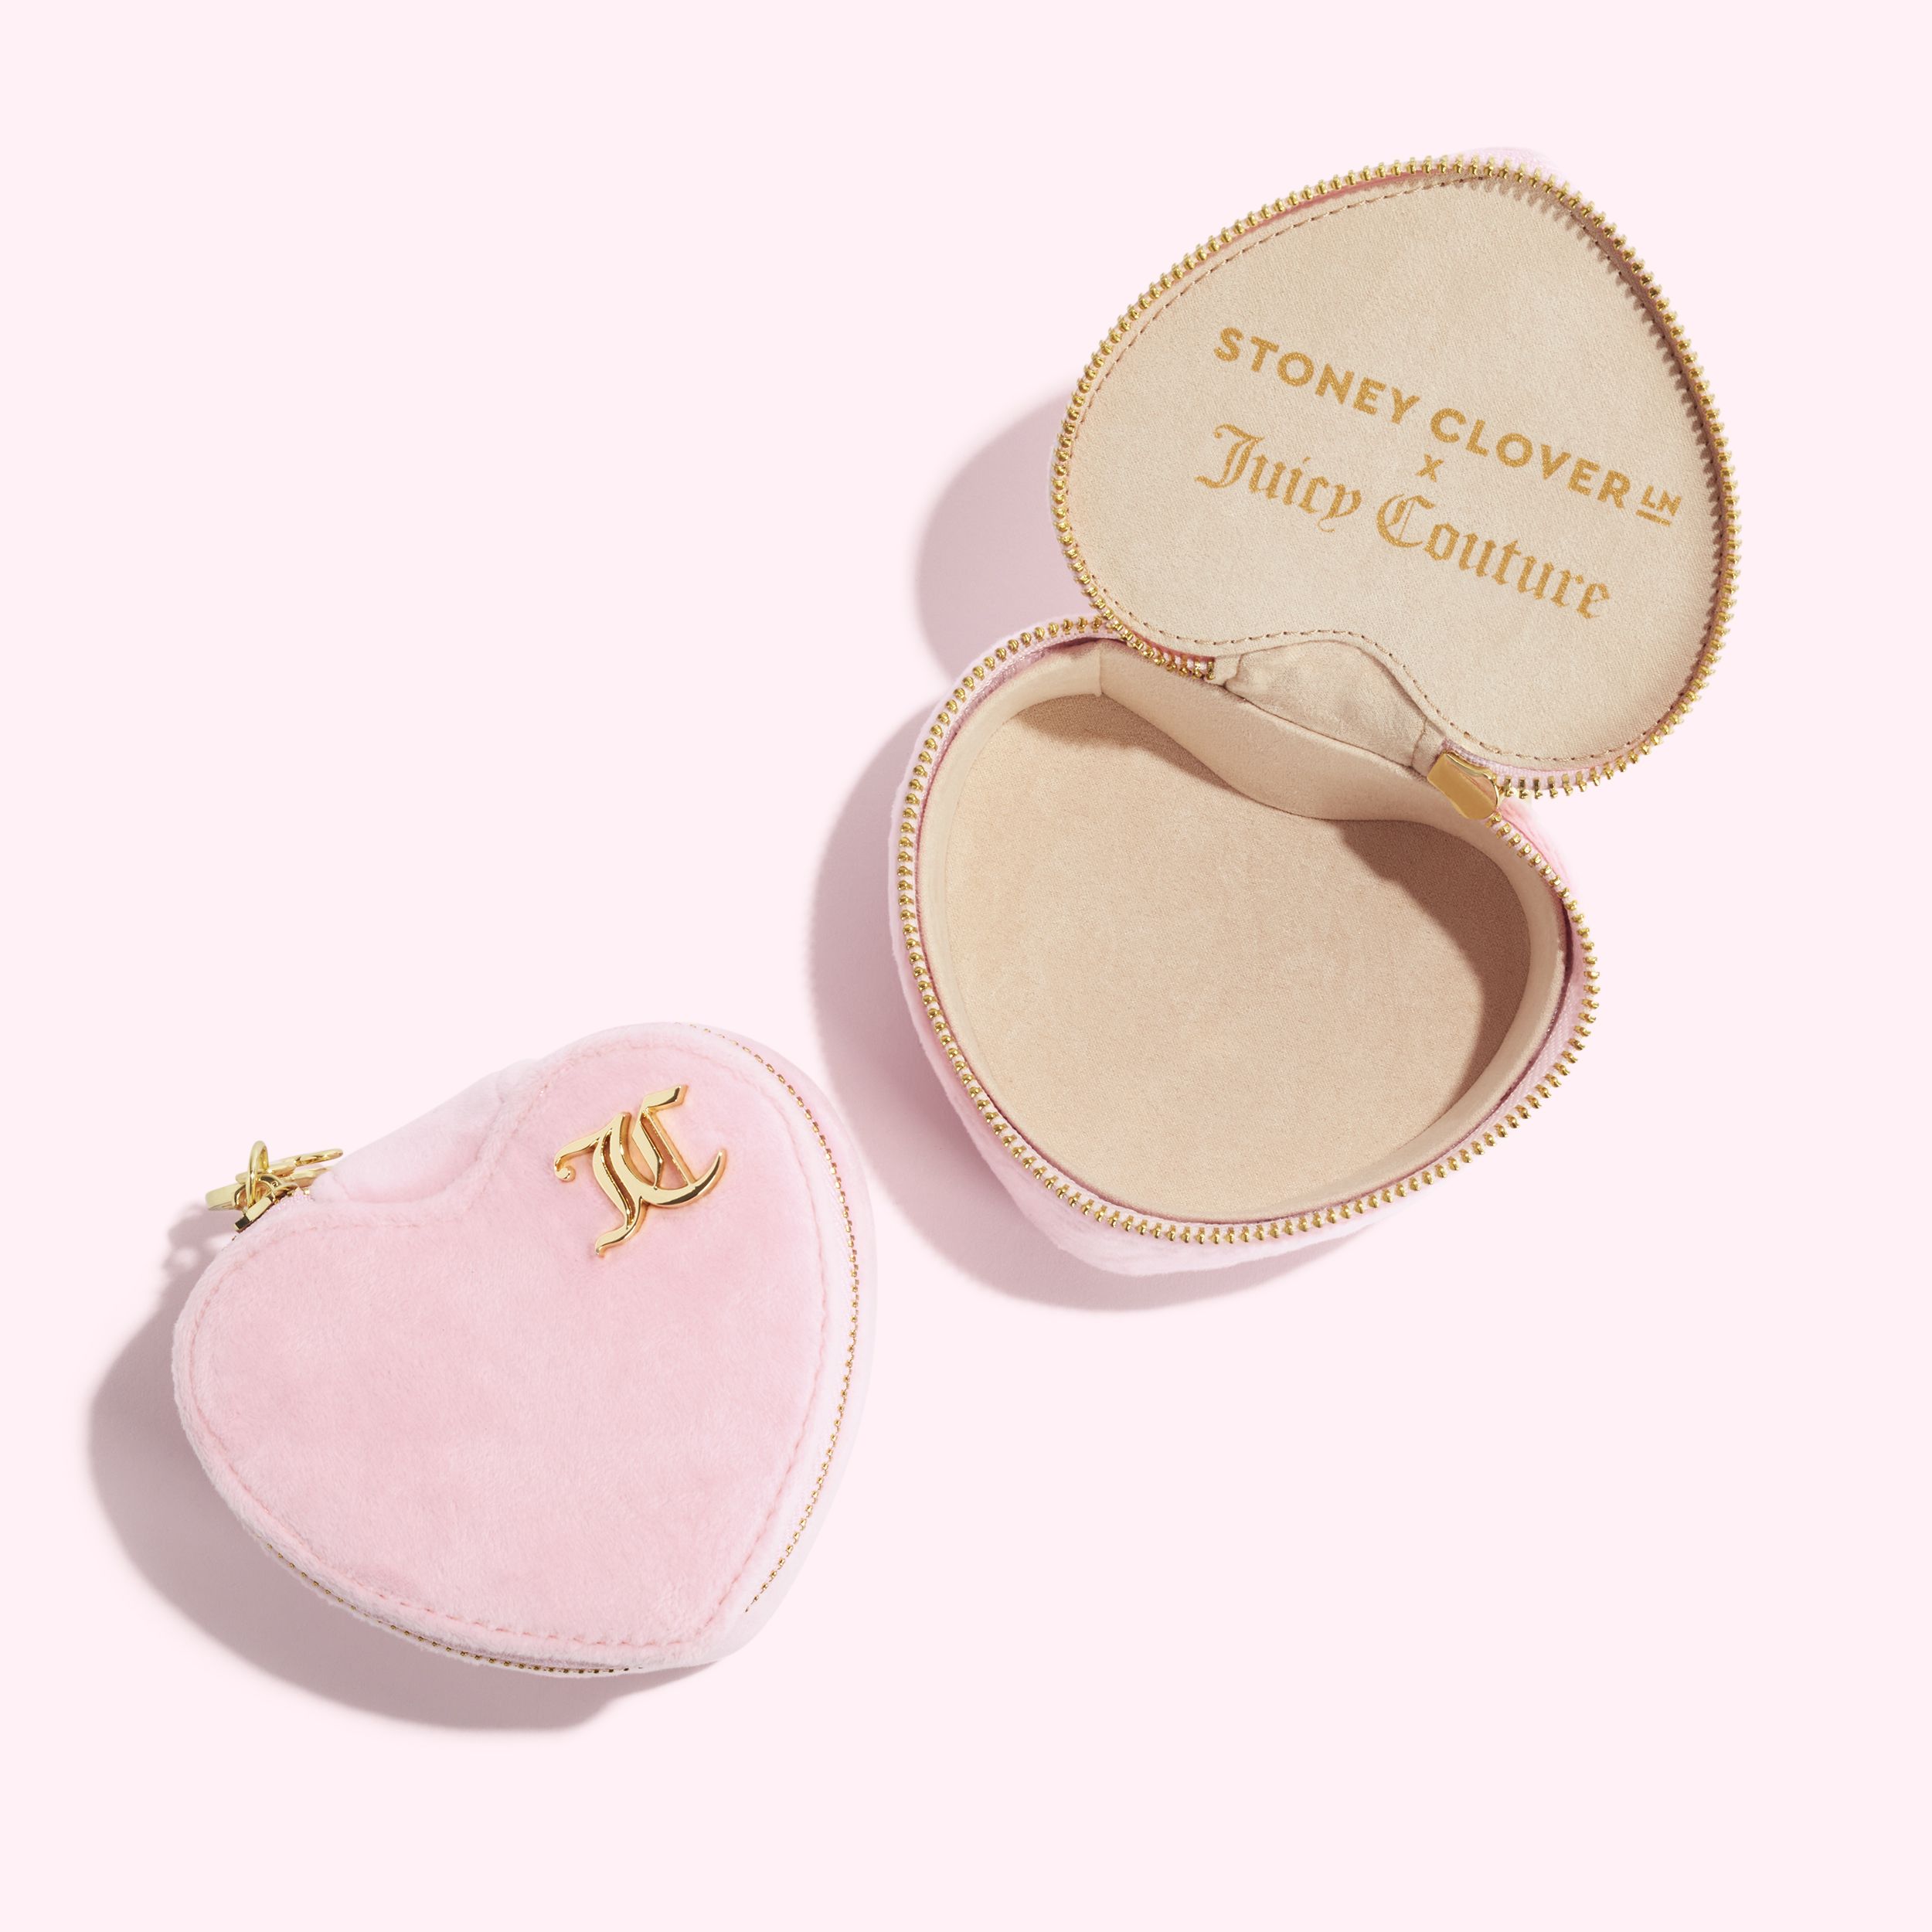 Juicy Couture Heart Bracelet Box | Travel Accessories - Stoney Clover Lane | Stoney Clover Lane